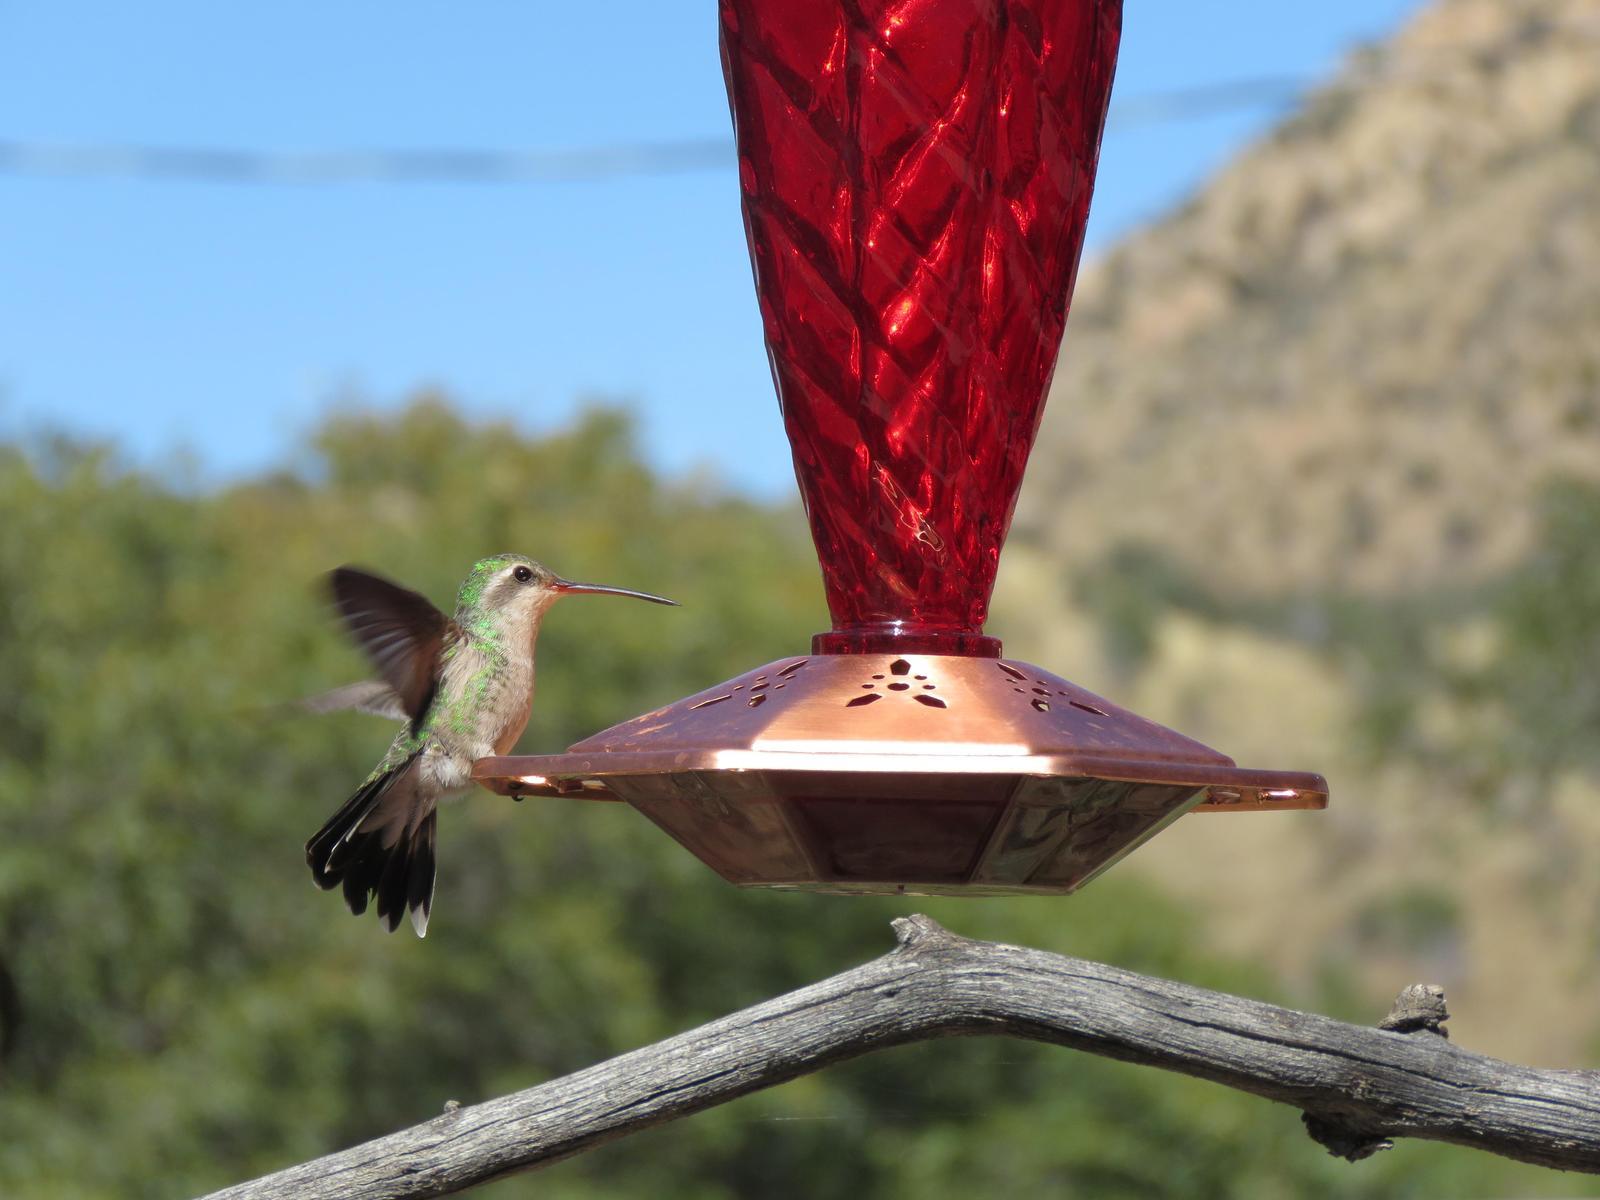 Broad-billed Hummingbird Photo by Nolan Keyes